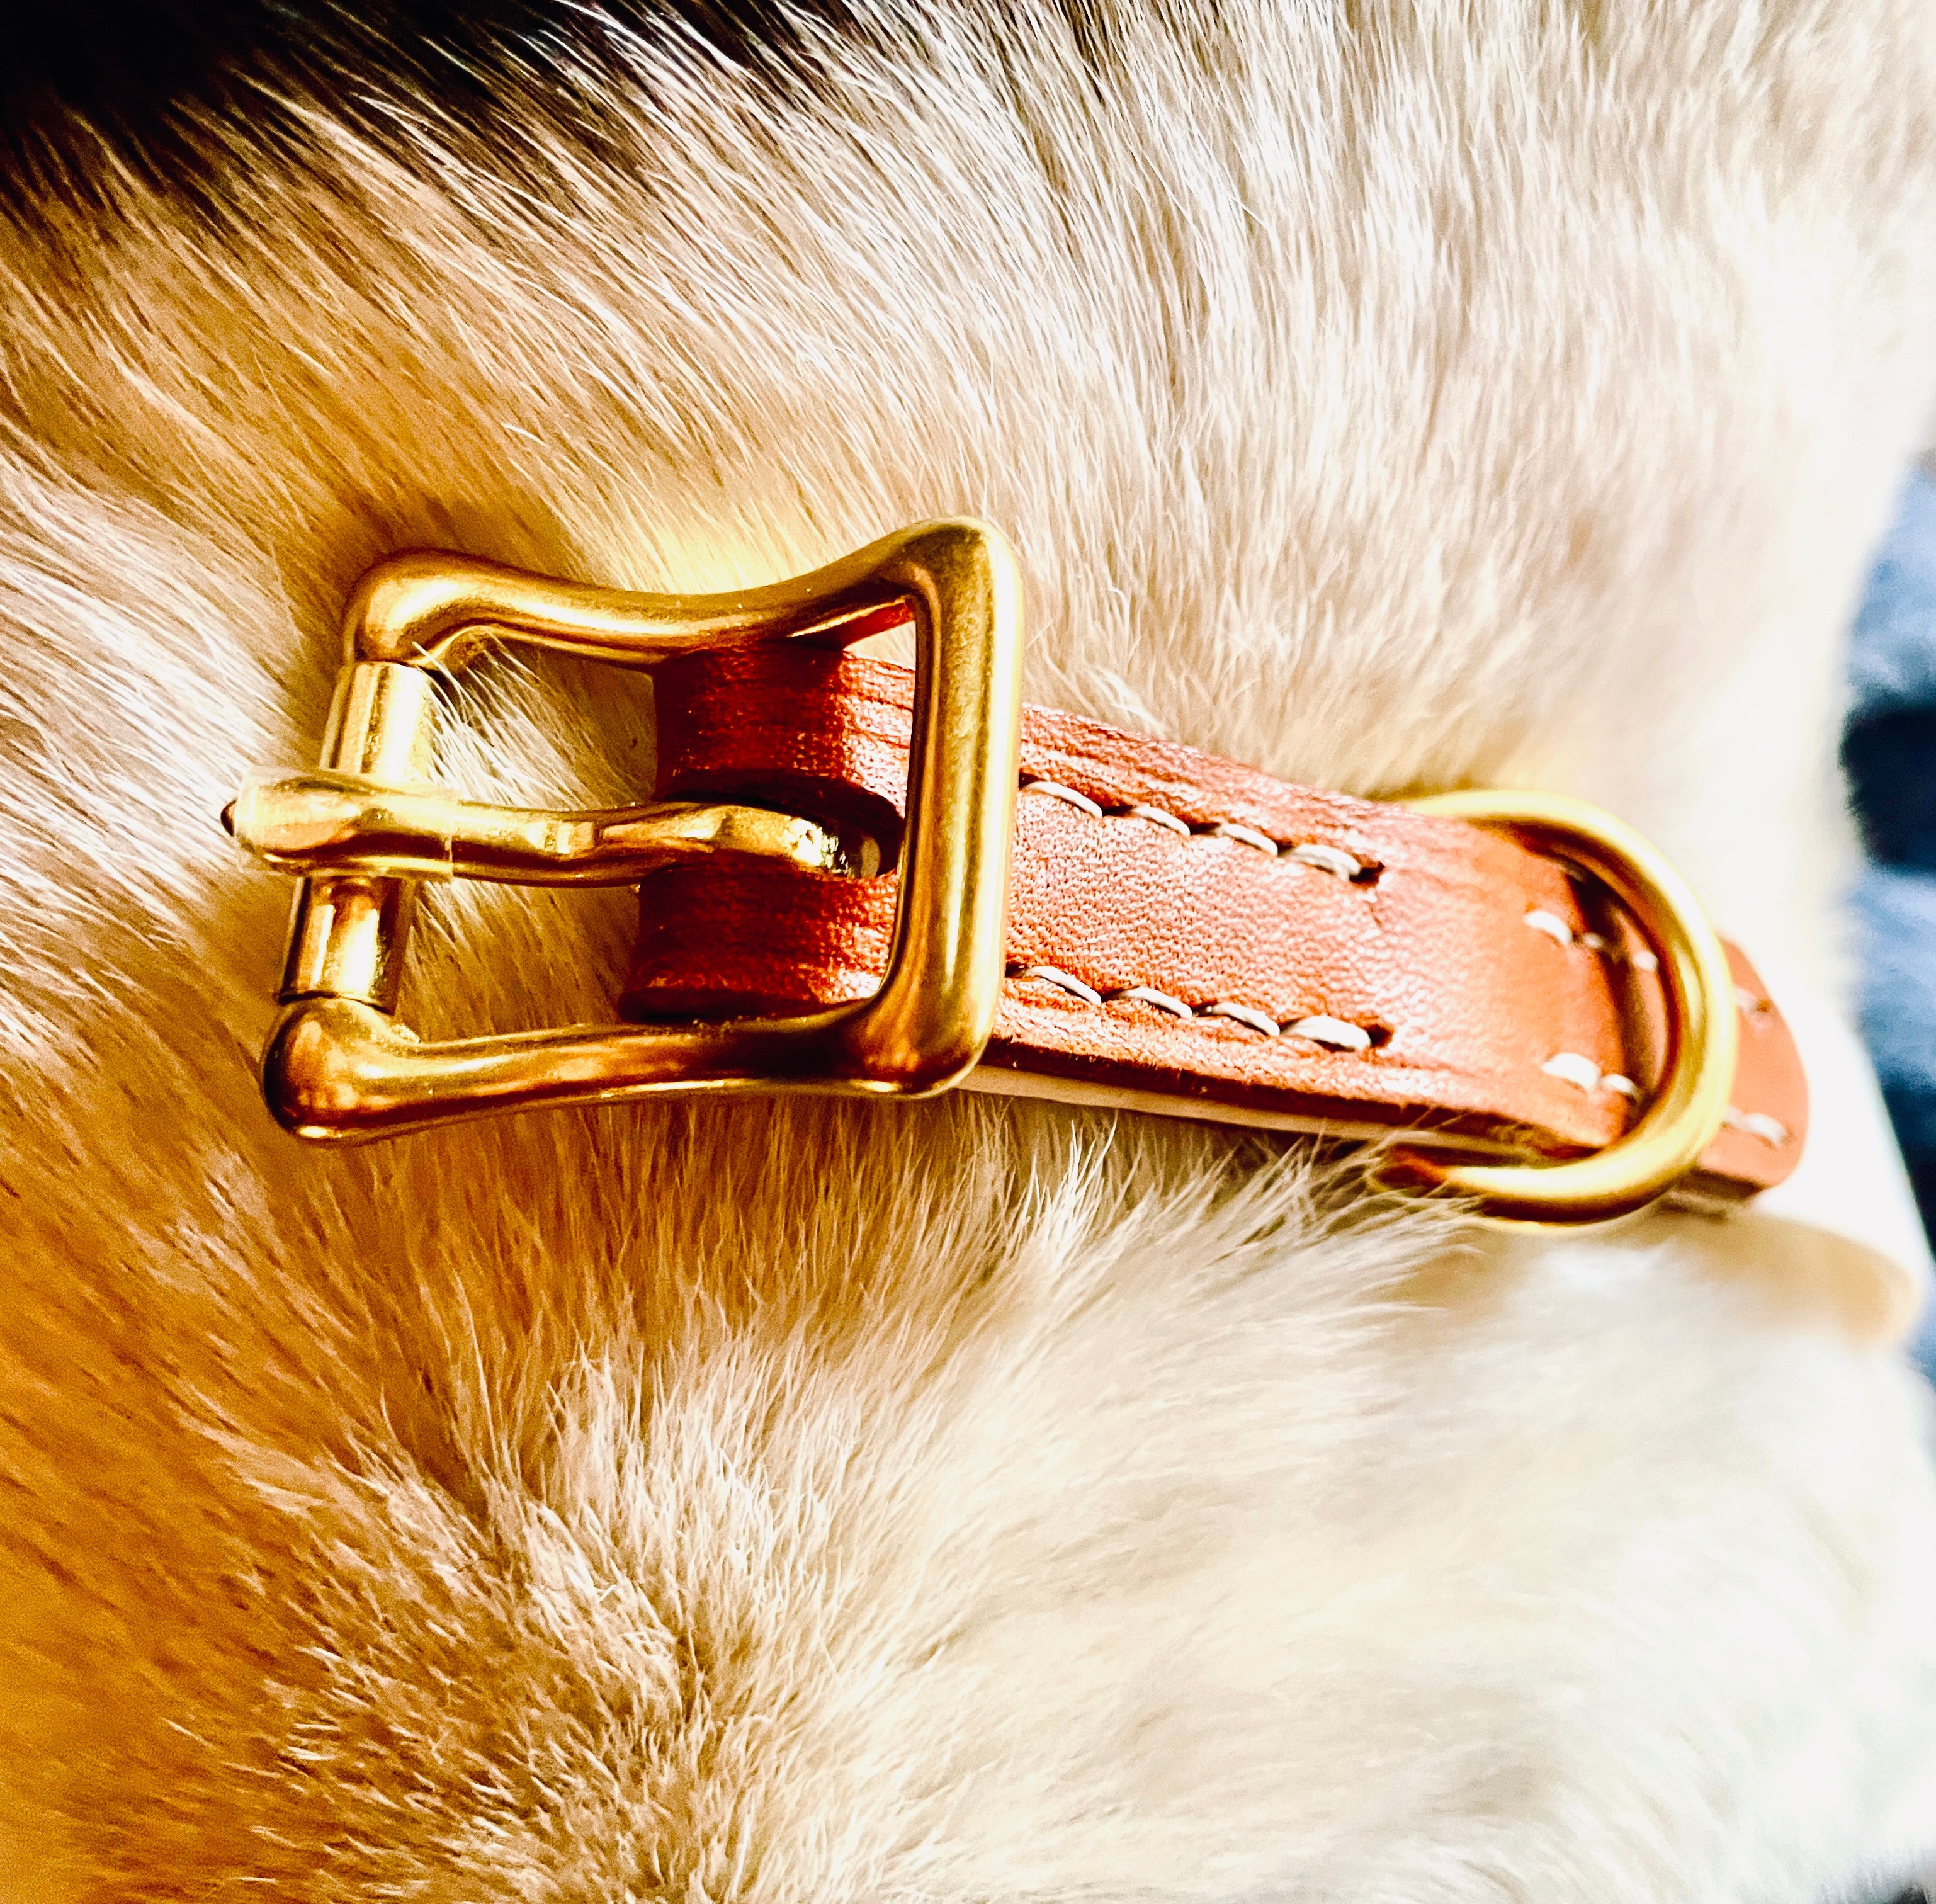 Royal Blue Dog Collar With Tan Leather + Cream/Orange/Brown Stitching